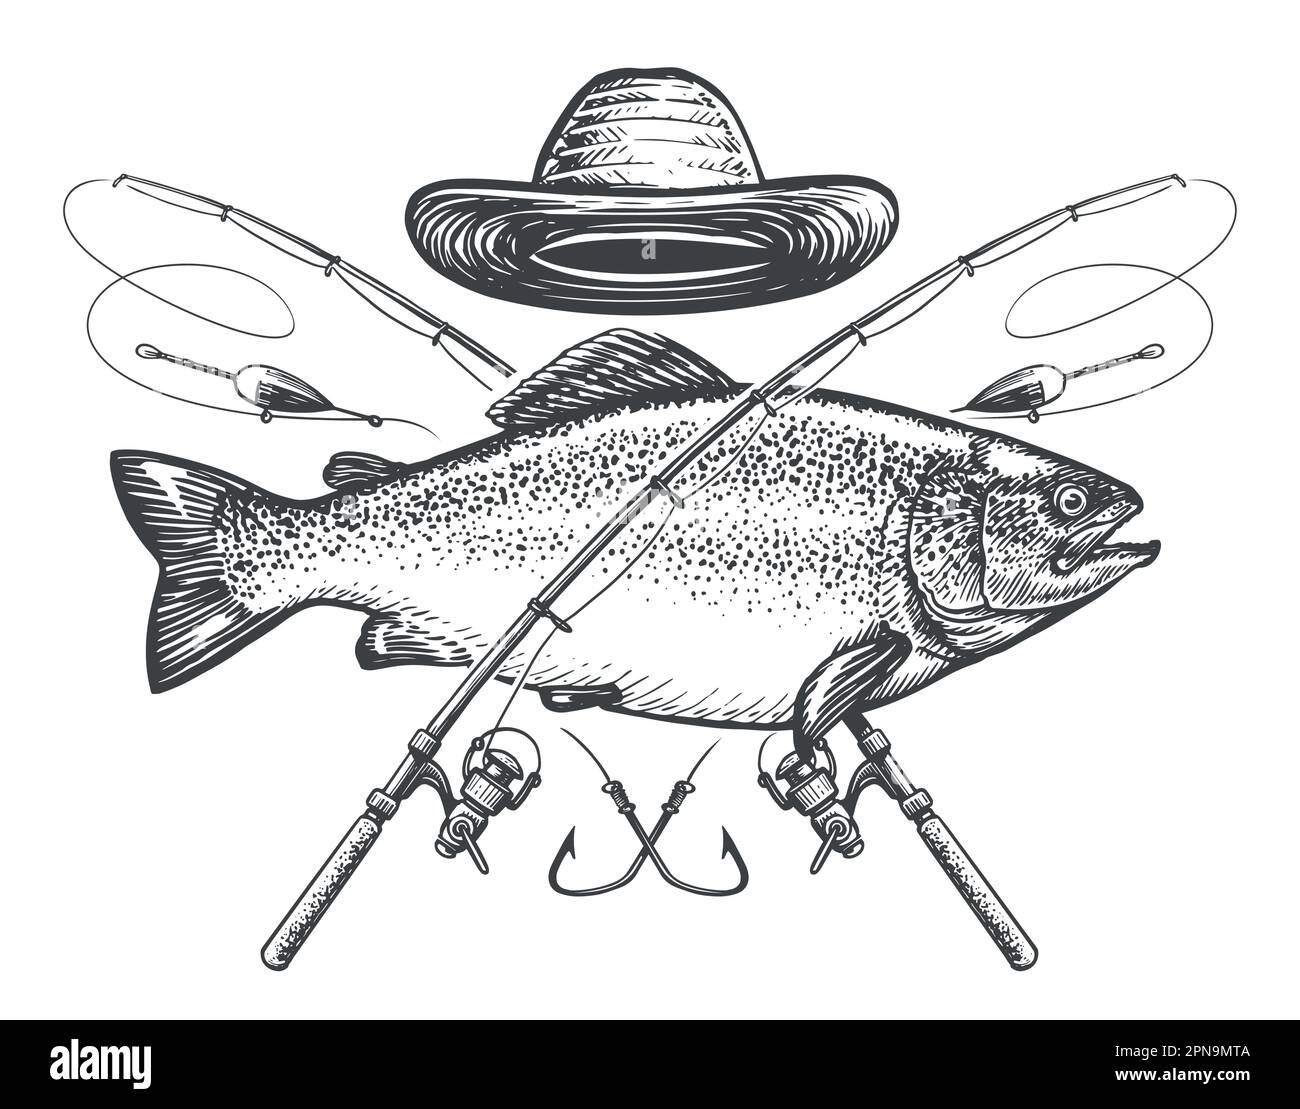 https://c8.alamy.com/comp/2PN9MTA/fishing-emblem-big-fish-and-crossed-fishing-rods-vintage-sketch-vector-illustration-2PN9MTA.jpg